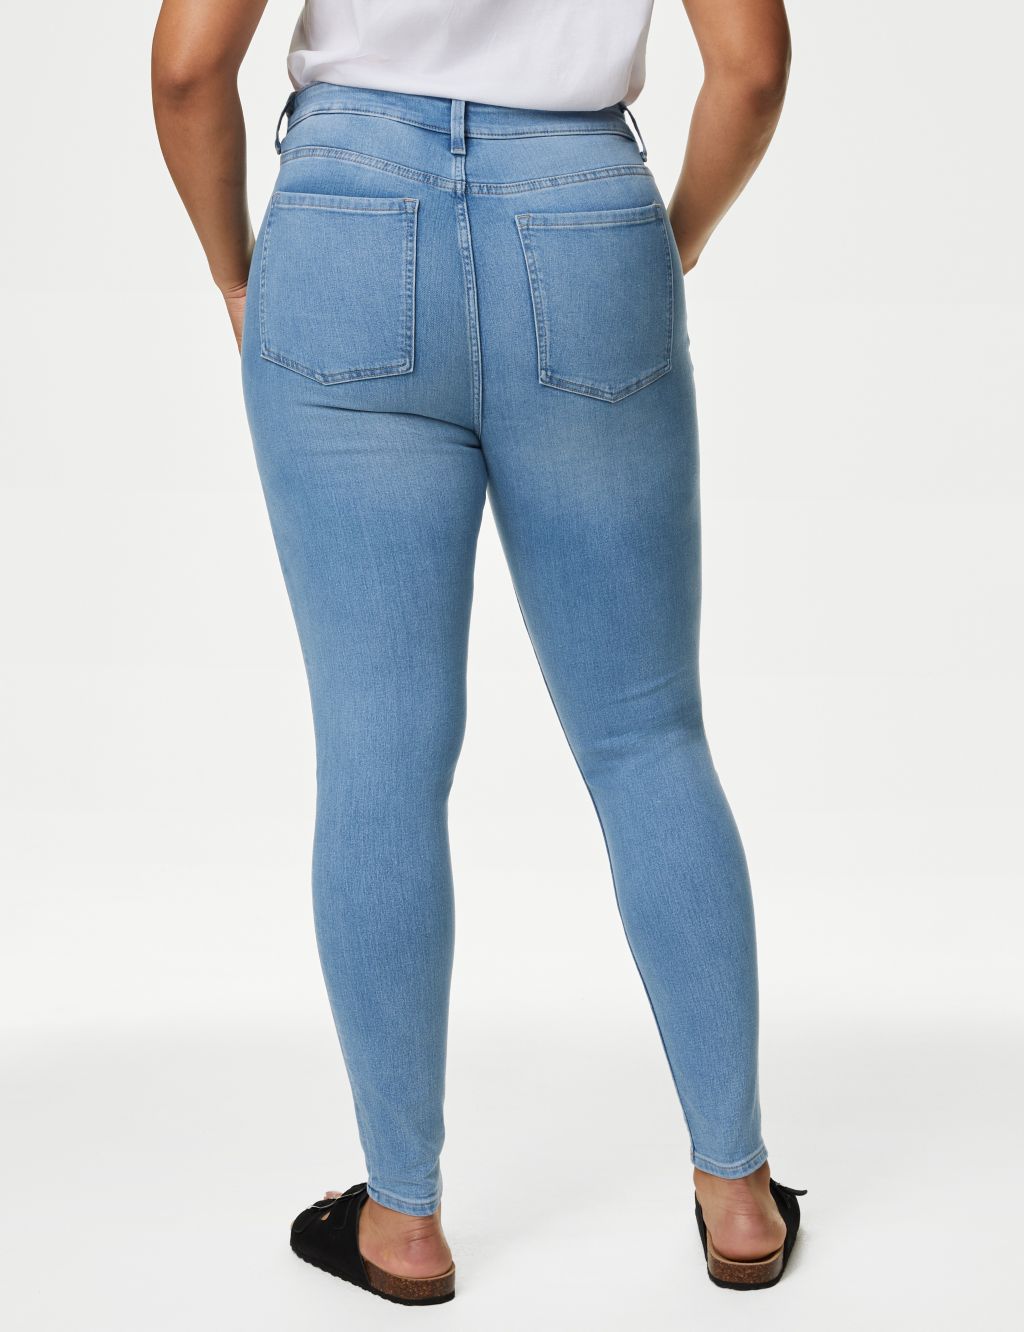 Ivy Skinny Jeans image 5